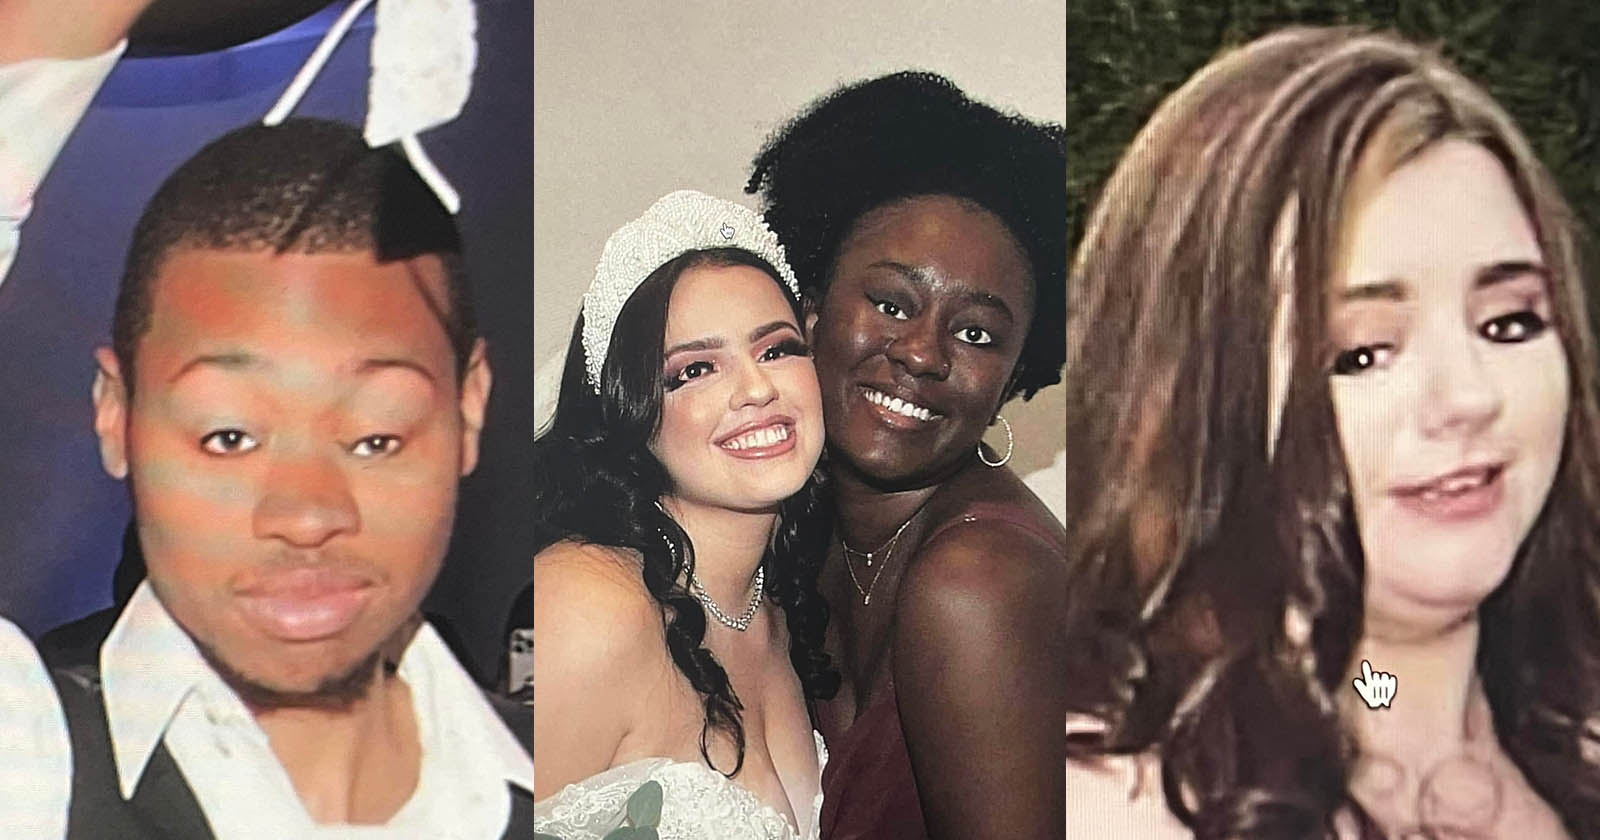 Bride Shocked to Find ‘Crazy Eyes’ Photoshopped Into Wedding Photos